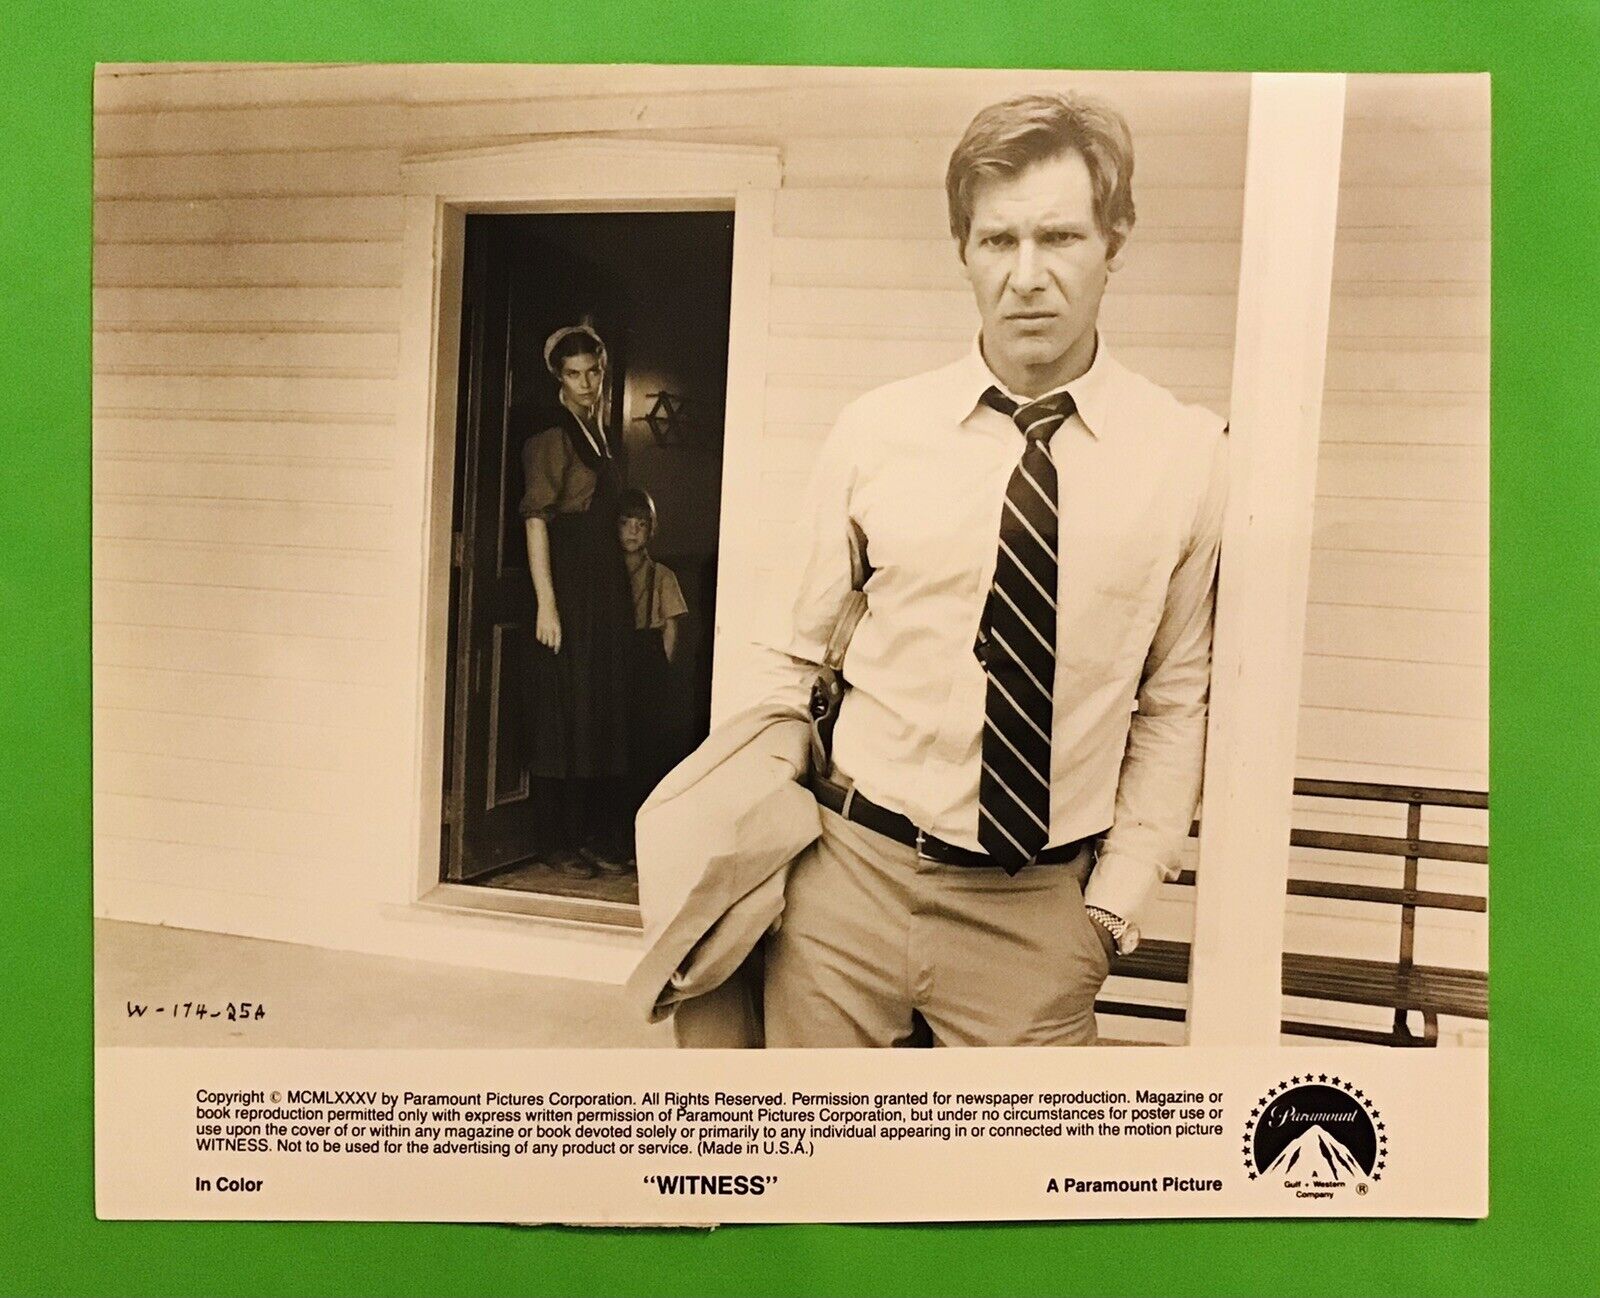 1985 Movie Still Press Photo “WITNESS” Kelly McGillis & Harrison Ford